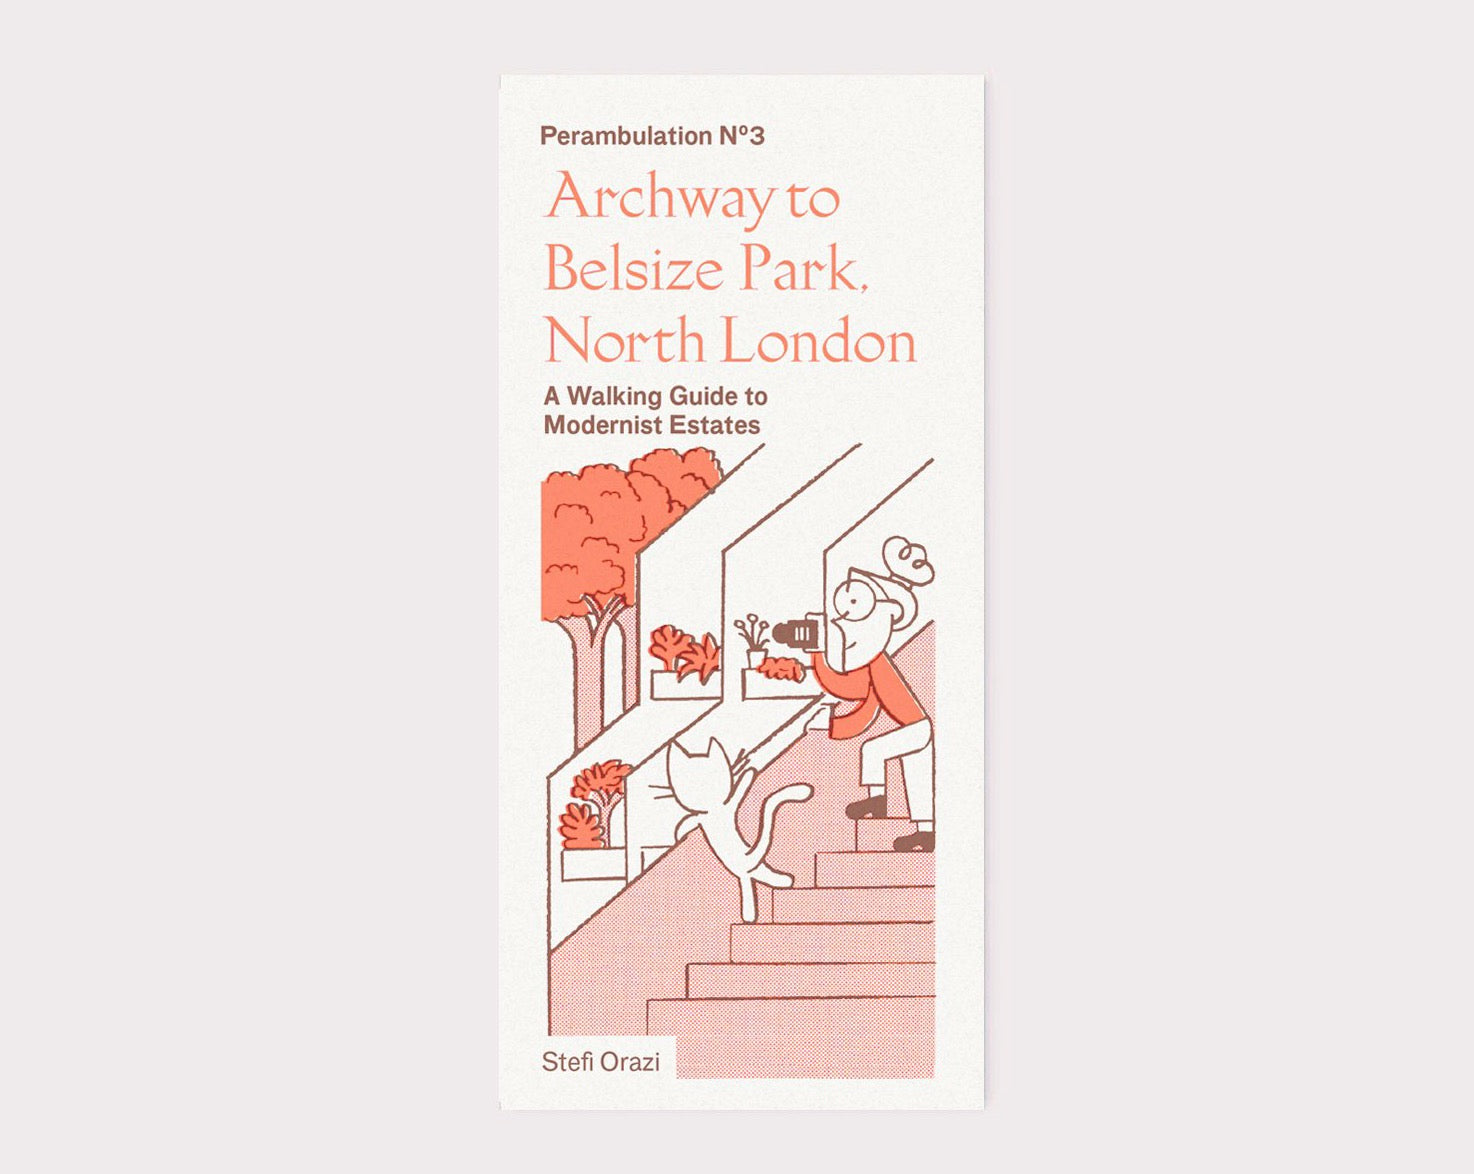 Perambulation Nº3—Archway to Belsize Park by Stefi Orazi